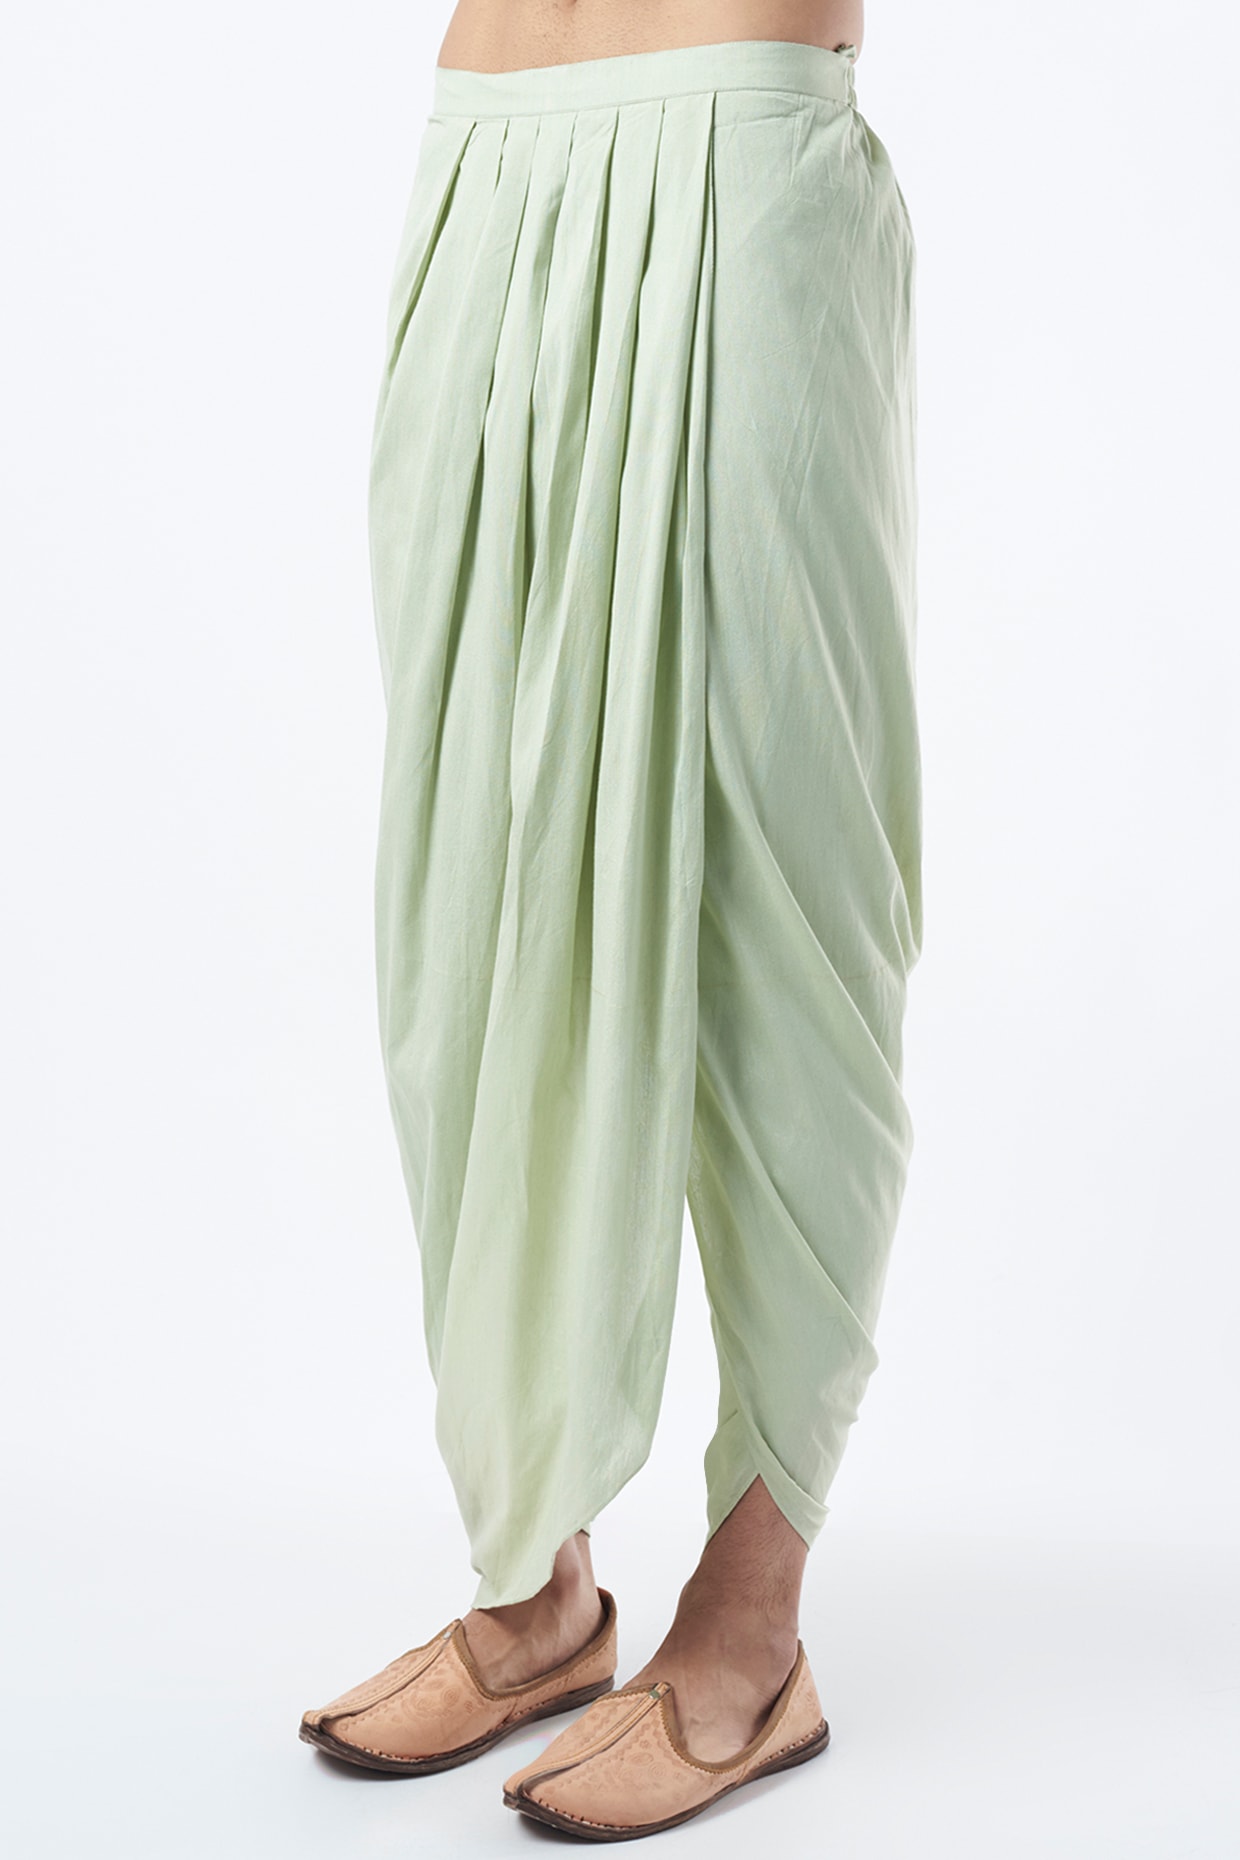 Mint Green Embroidered Dhoti Pant Set Design by Priyanka Jain at Pernias  Pop Up Shop 2023